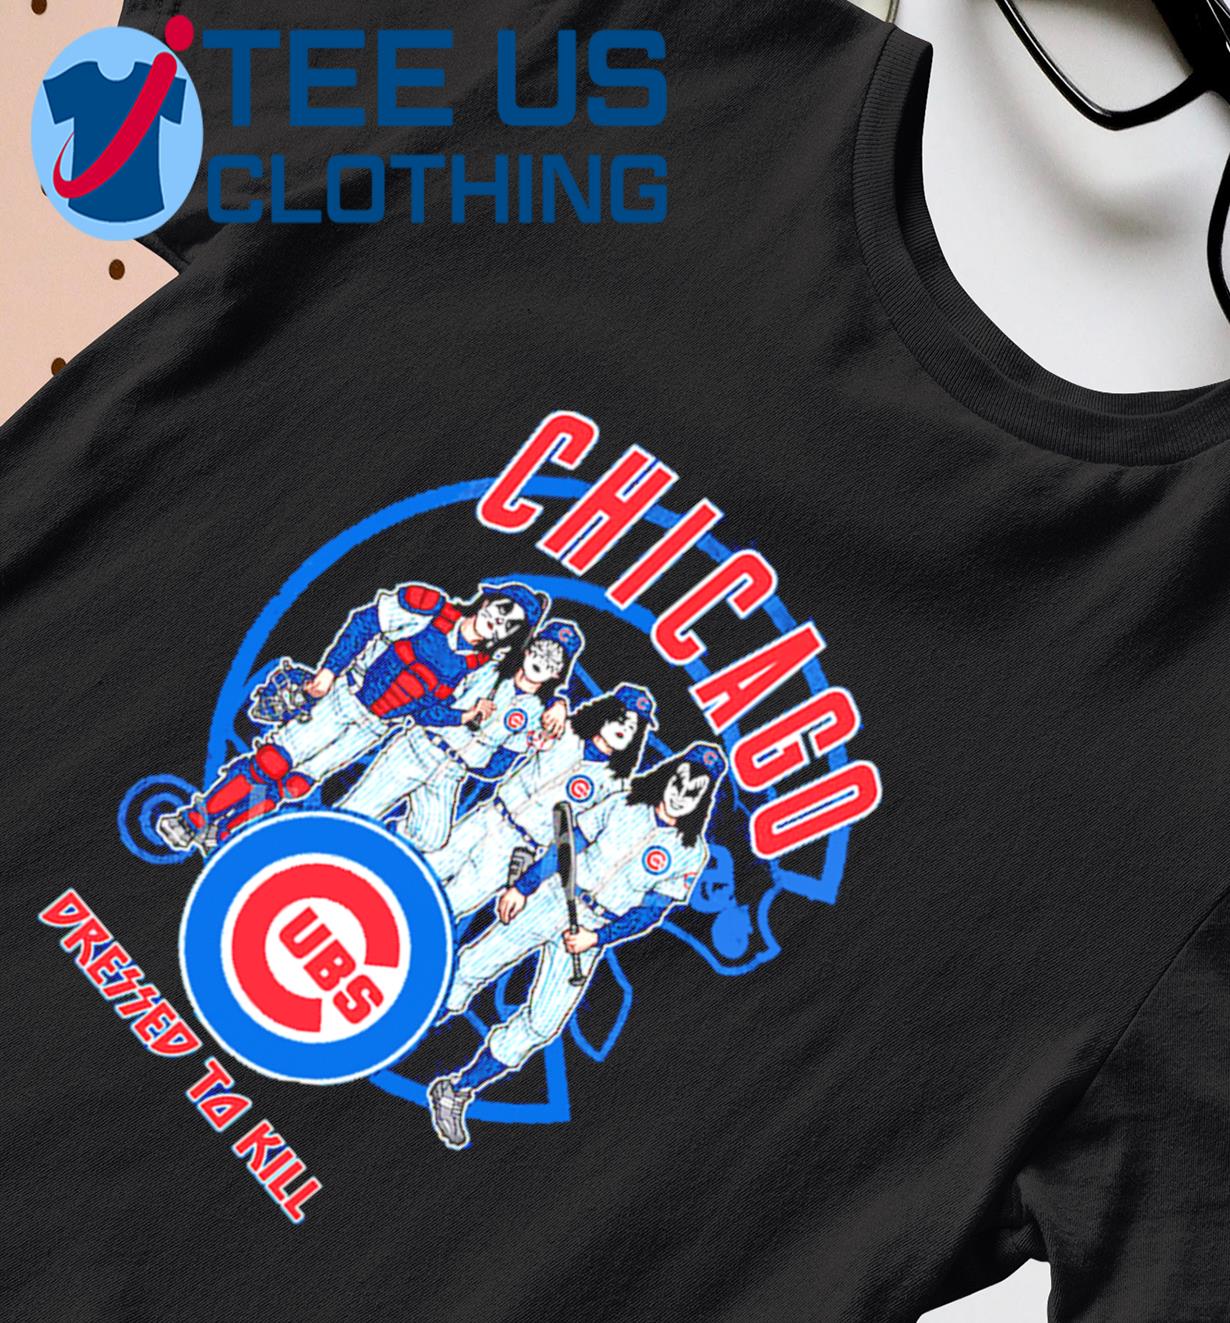 Chicago Cubs Kiss Dressed To Kill Shirt - High-Quality Printed Brand